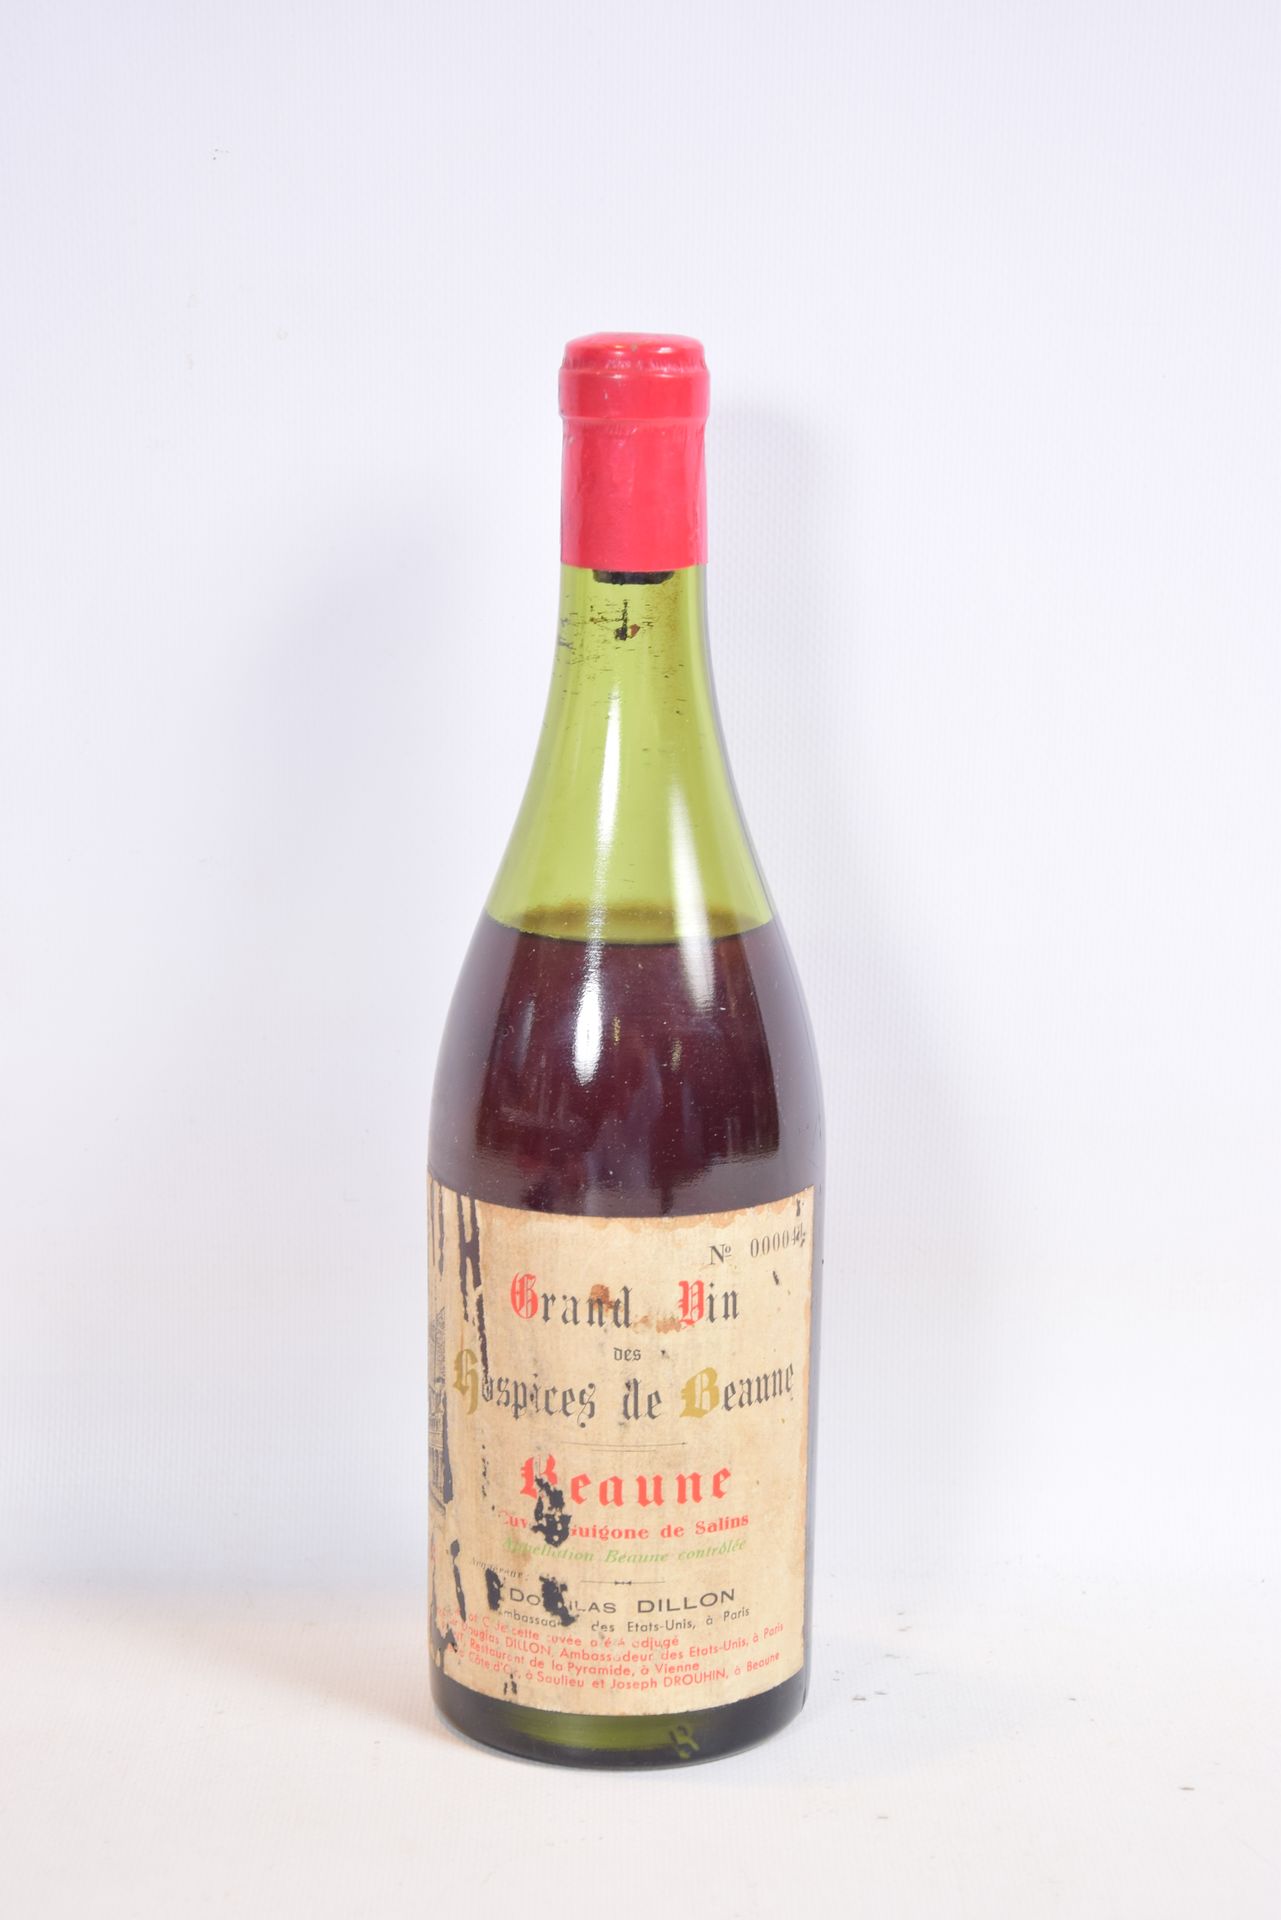 Null 1 Blle BEAUNE - Hospices de Beaune - Cuvée Guigone de Salins concedida a 19&hellip;